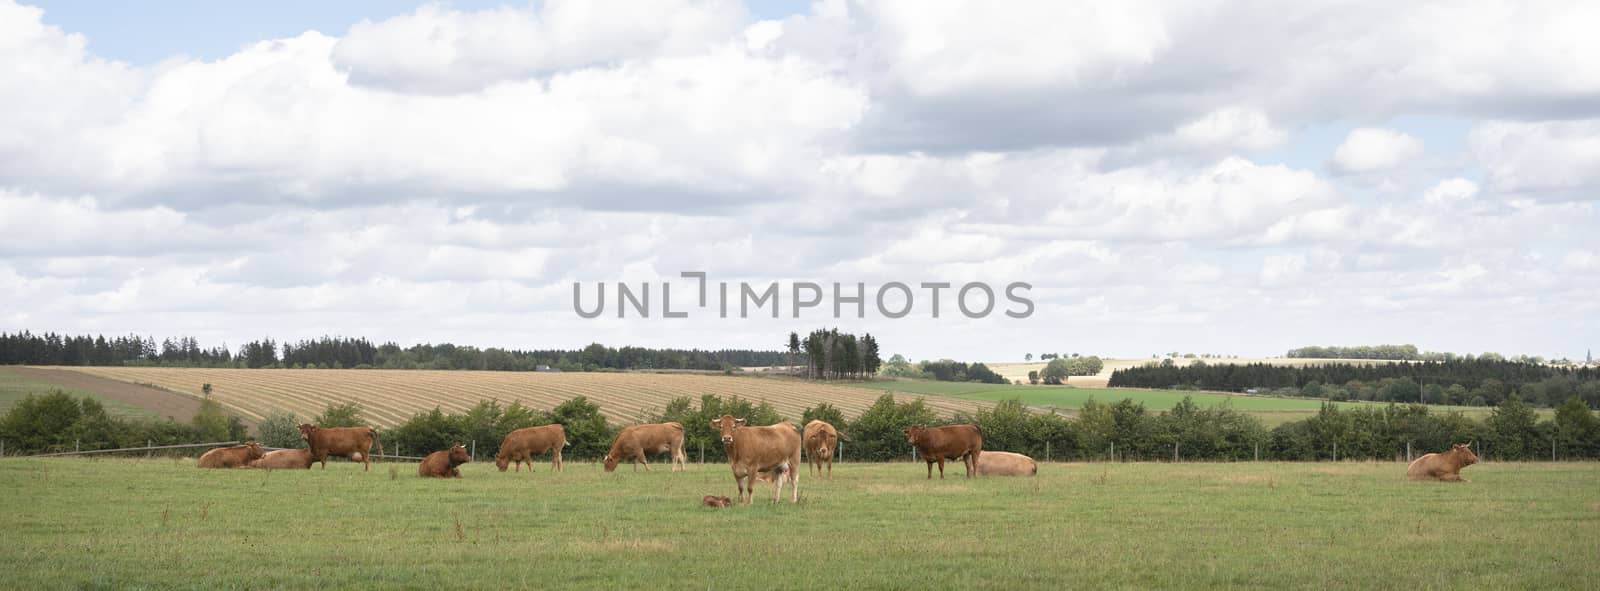 brown cows in hills of german eifel countryside landscape in summer